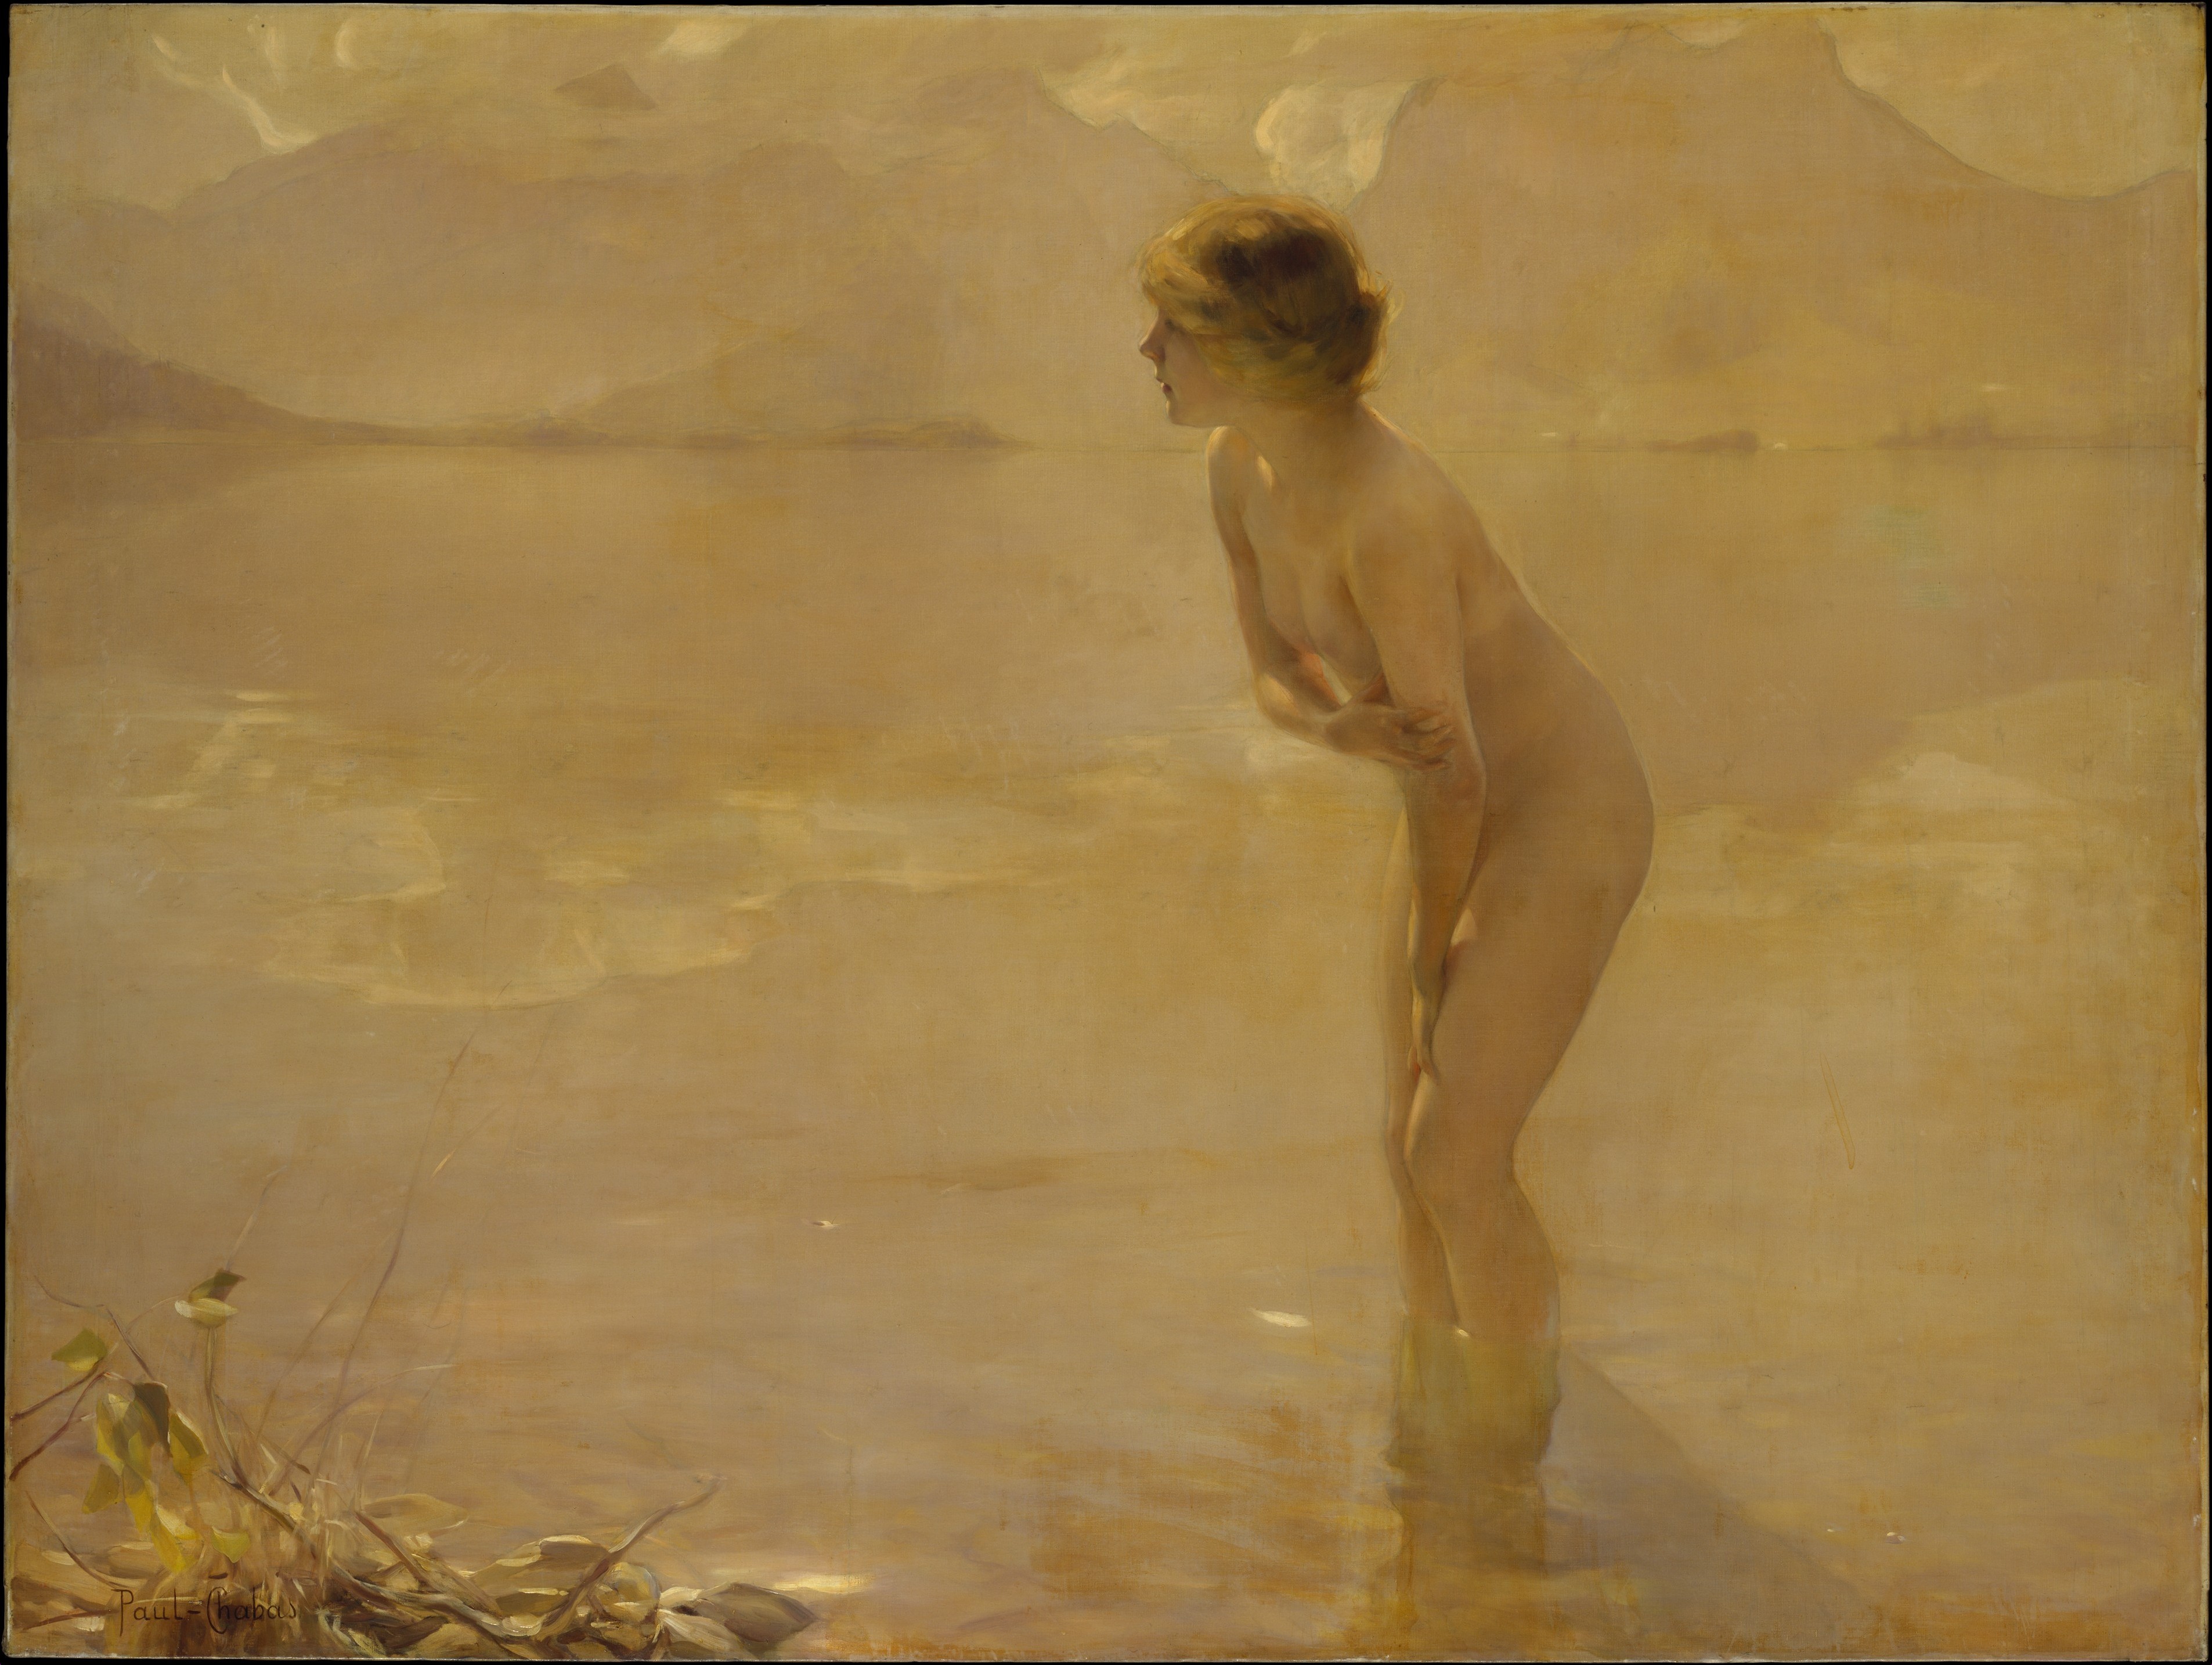 September Morn by Paul Chabas - 1910-1912 - 163.8 x 216.5 cm Metropolitan Museum of Art